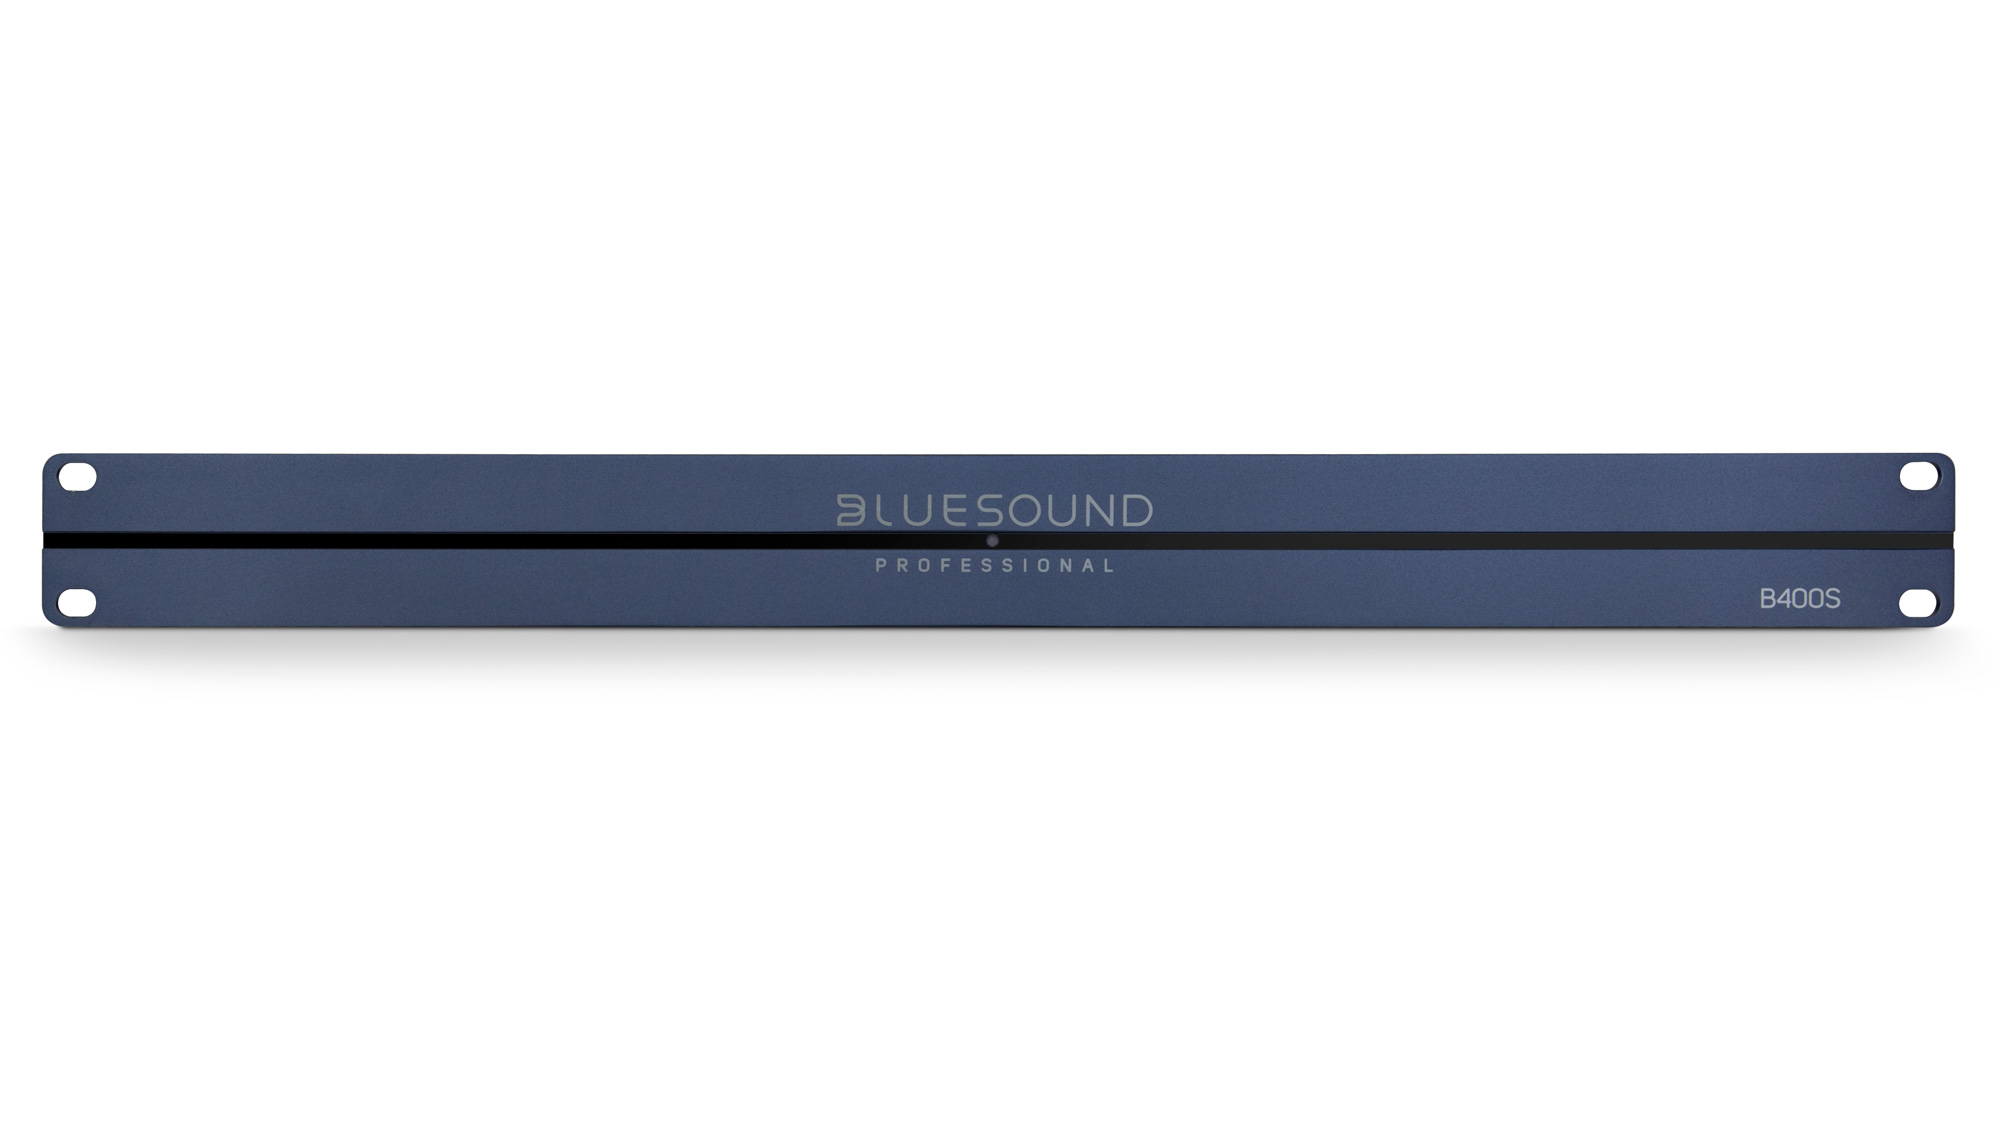 Bluesound Professional B400S Frontansicht